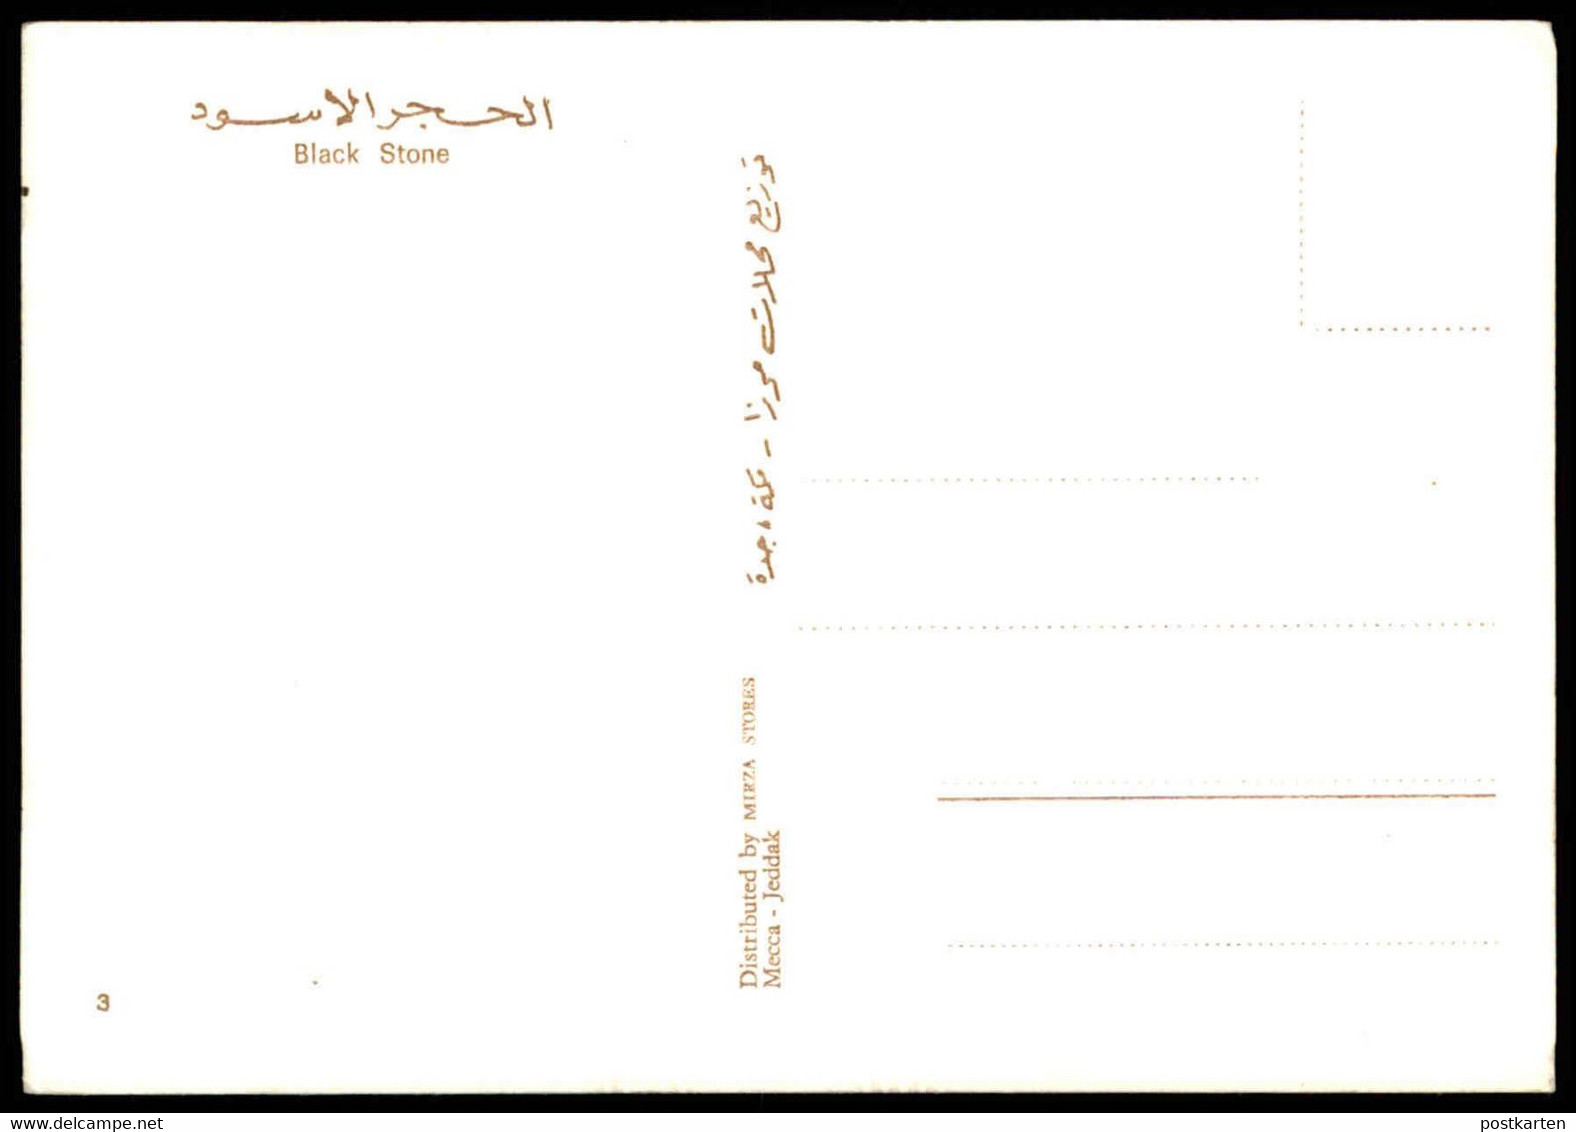 ÄLTERE KARTE MECCA HADDSCH BLACK STONE KAABA Mekka Saudi Arabien Saudi Arabia Pilger Cpa Ansichtskarte Postcard AK - Arabia Saudita